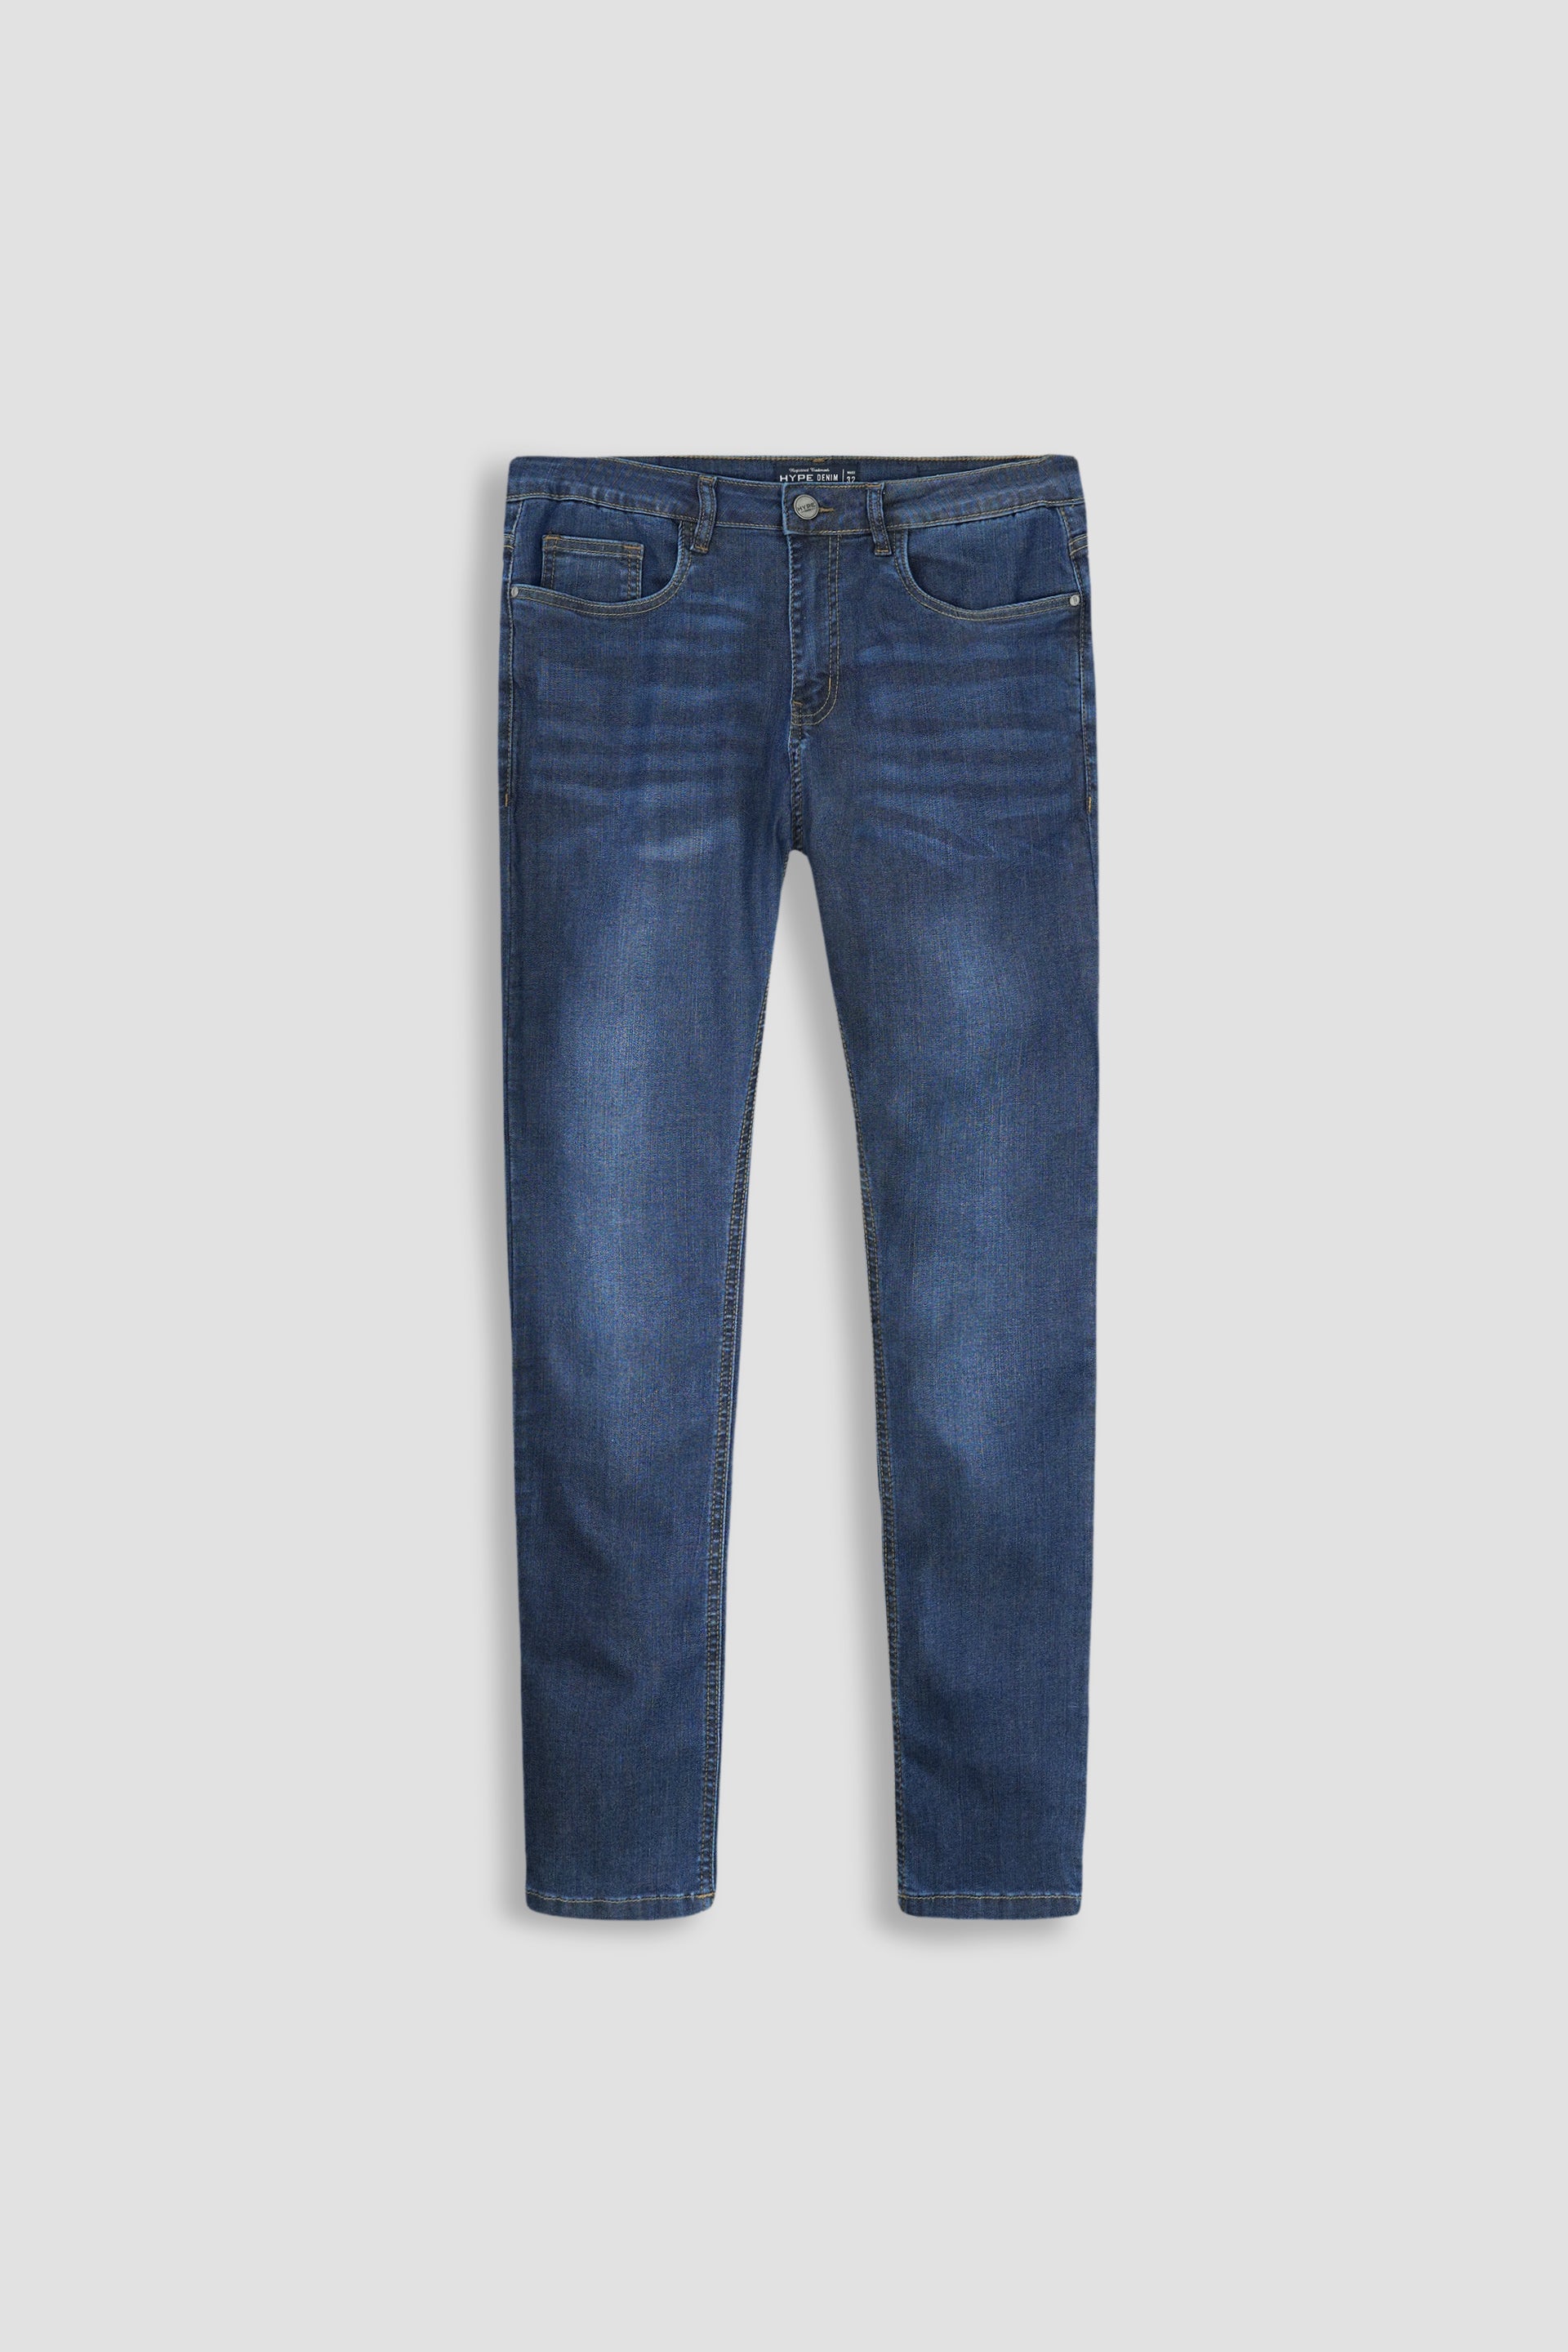 Blue Slim Fit Wash Denim Jeans 002504